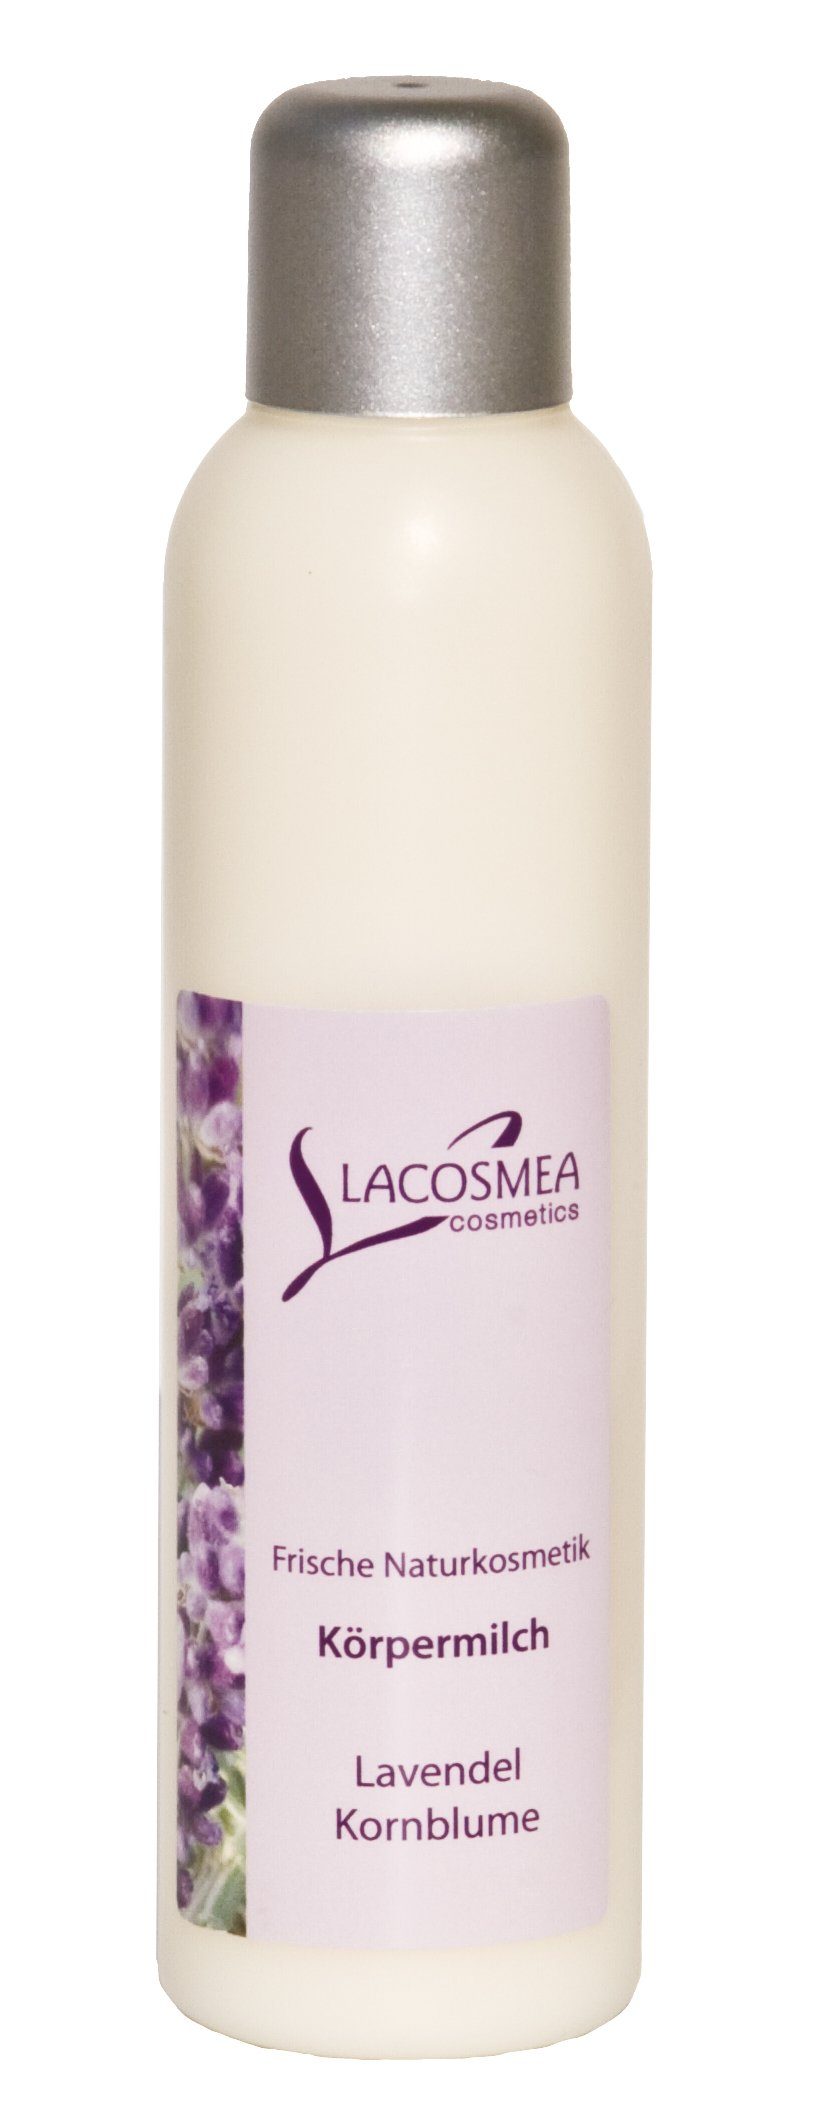 Lacosmea Körpermilch Lavendel/Kornblume Körpermilch Cosmetics